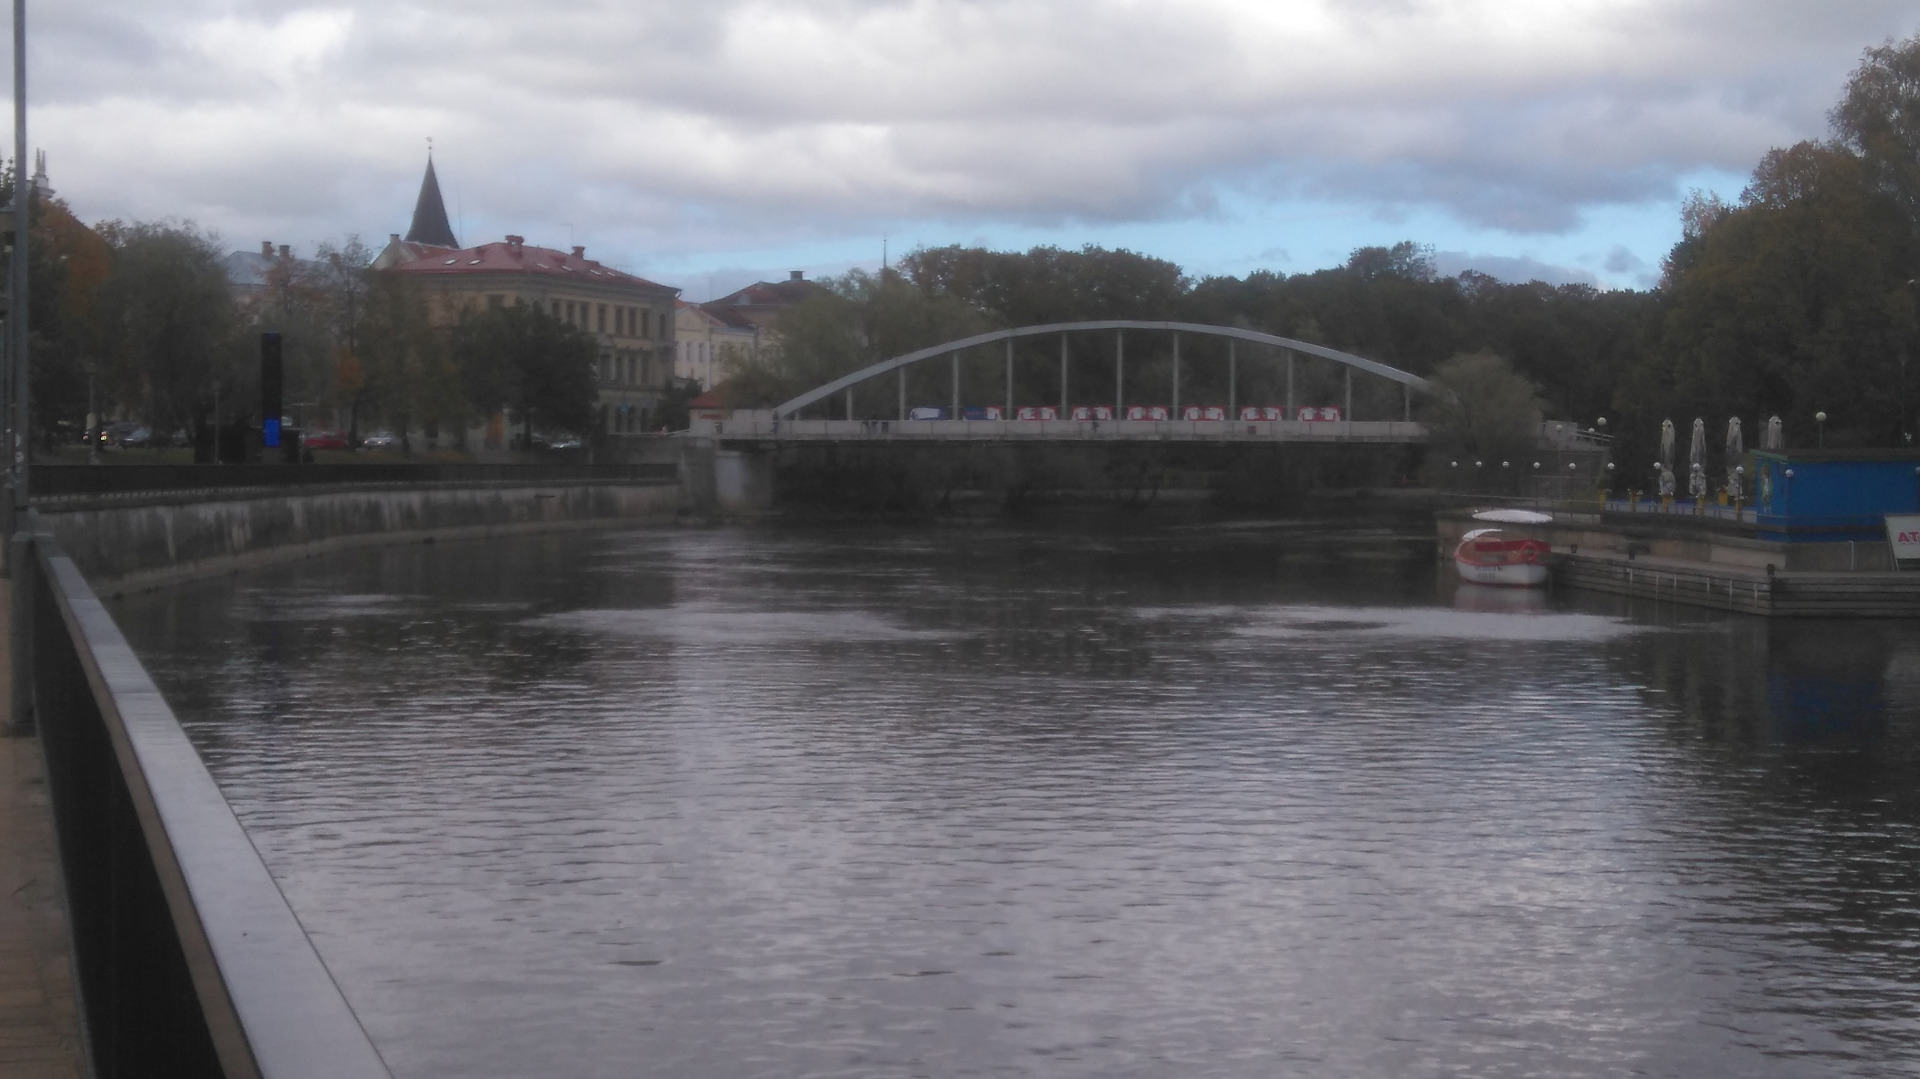 Tartu, stone bridge Emajõel rephoto